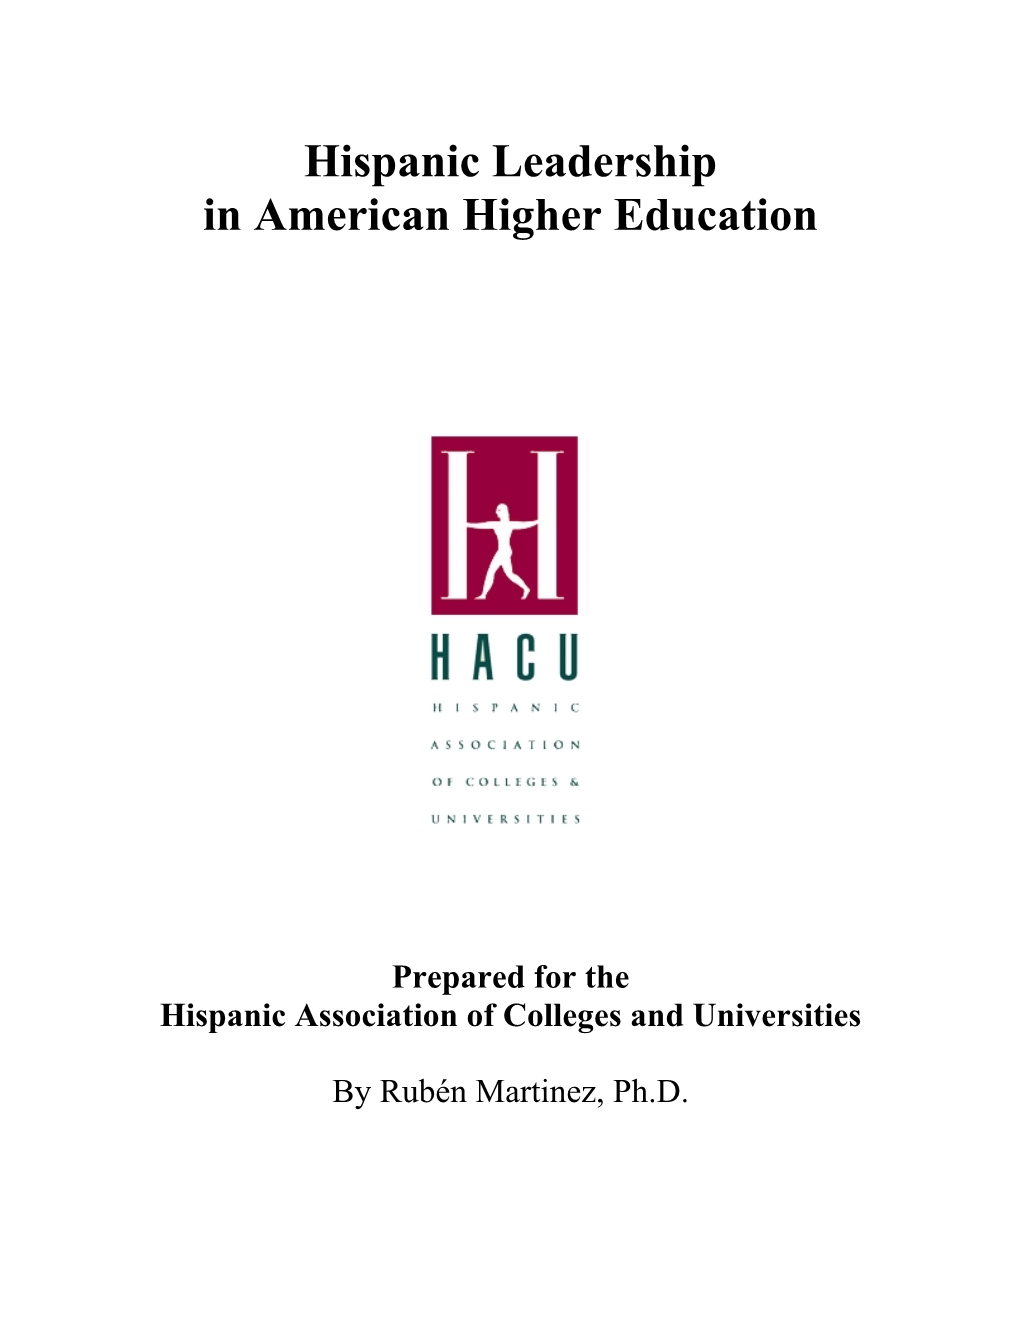 Hispanic Leadership in American Higher Education